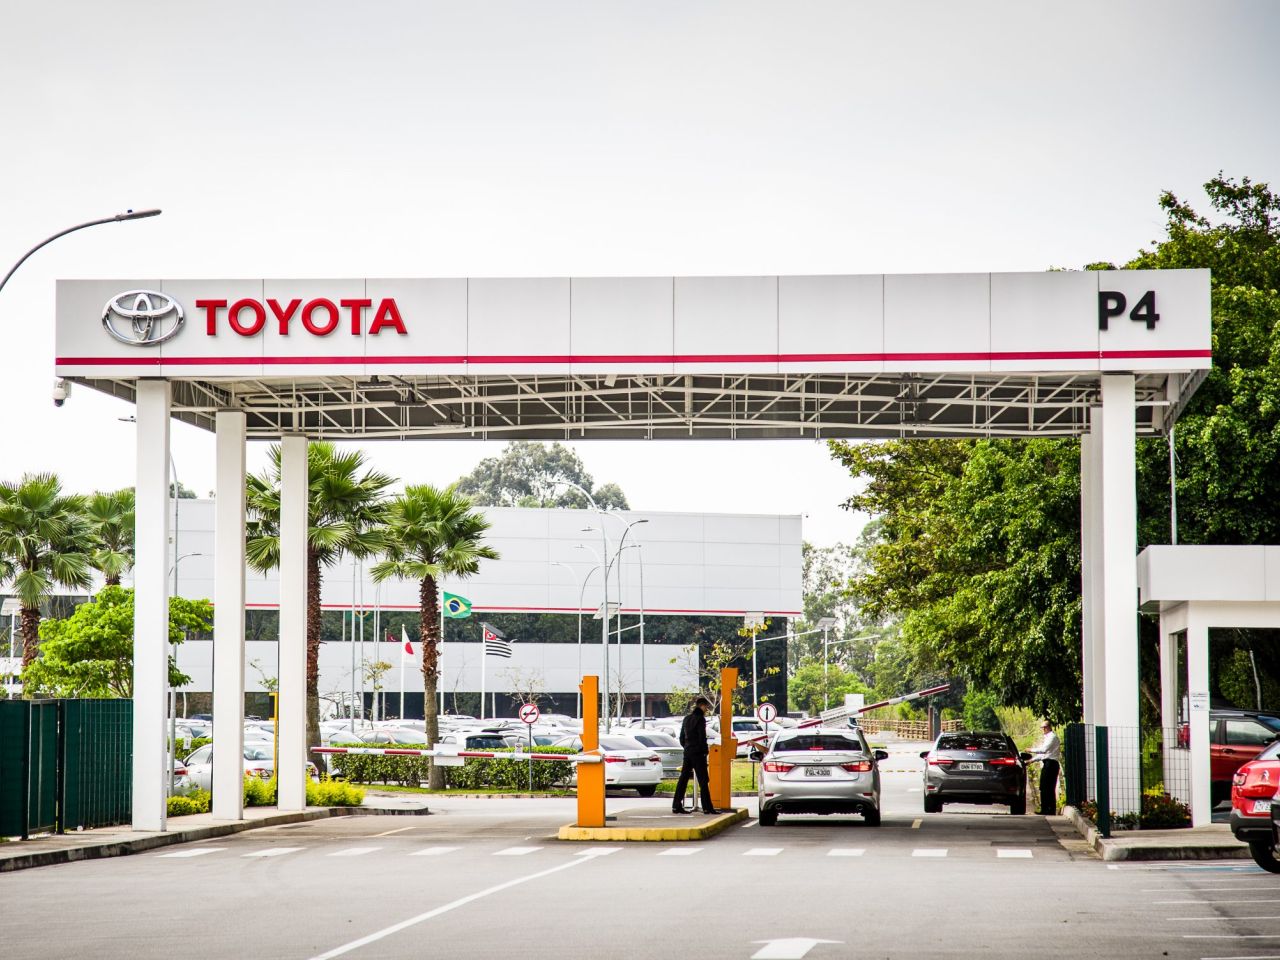 Fbrica de SBC da Toyota ser completamente desativada at 2023